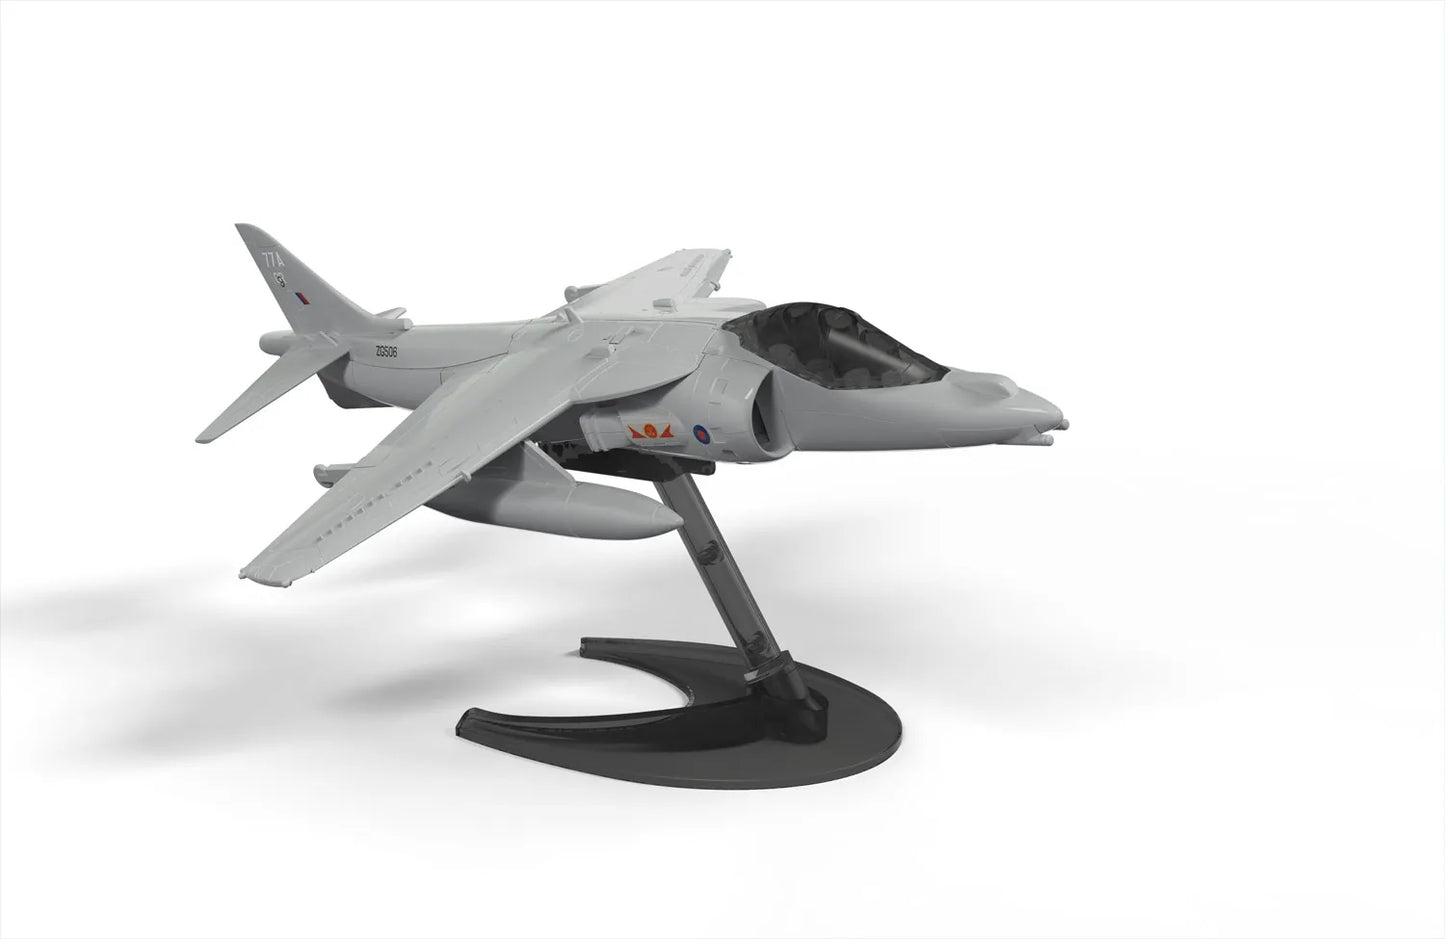 Airfix Quickbuild Bae Harrier